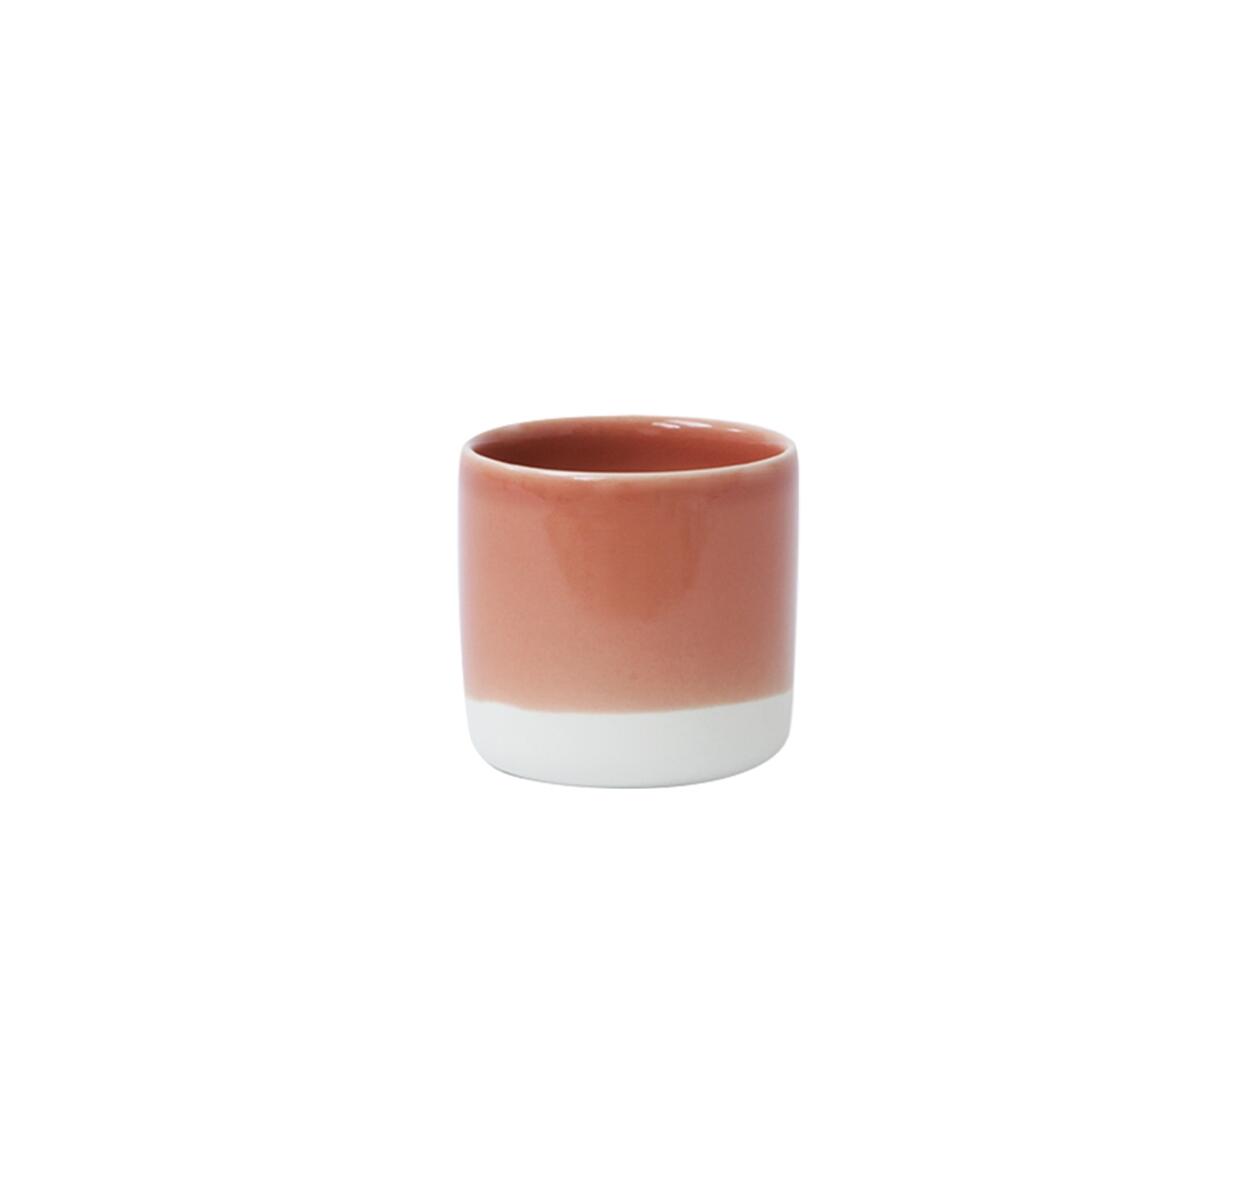 Tumbler S Cantine terre cuite, online ceramics shop Jars